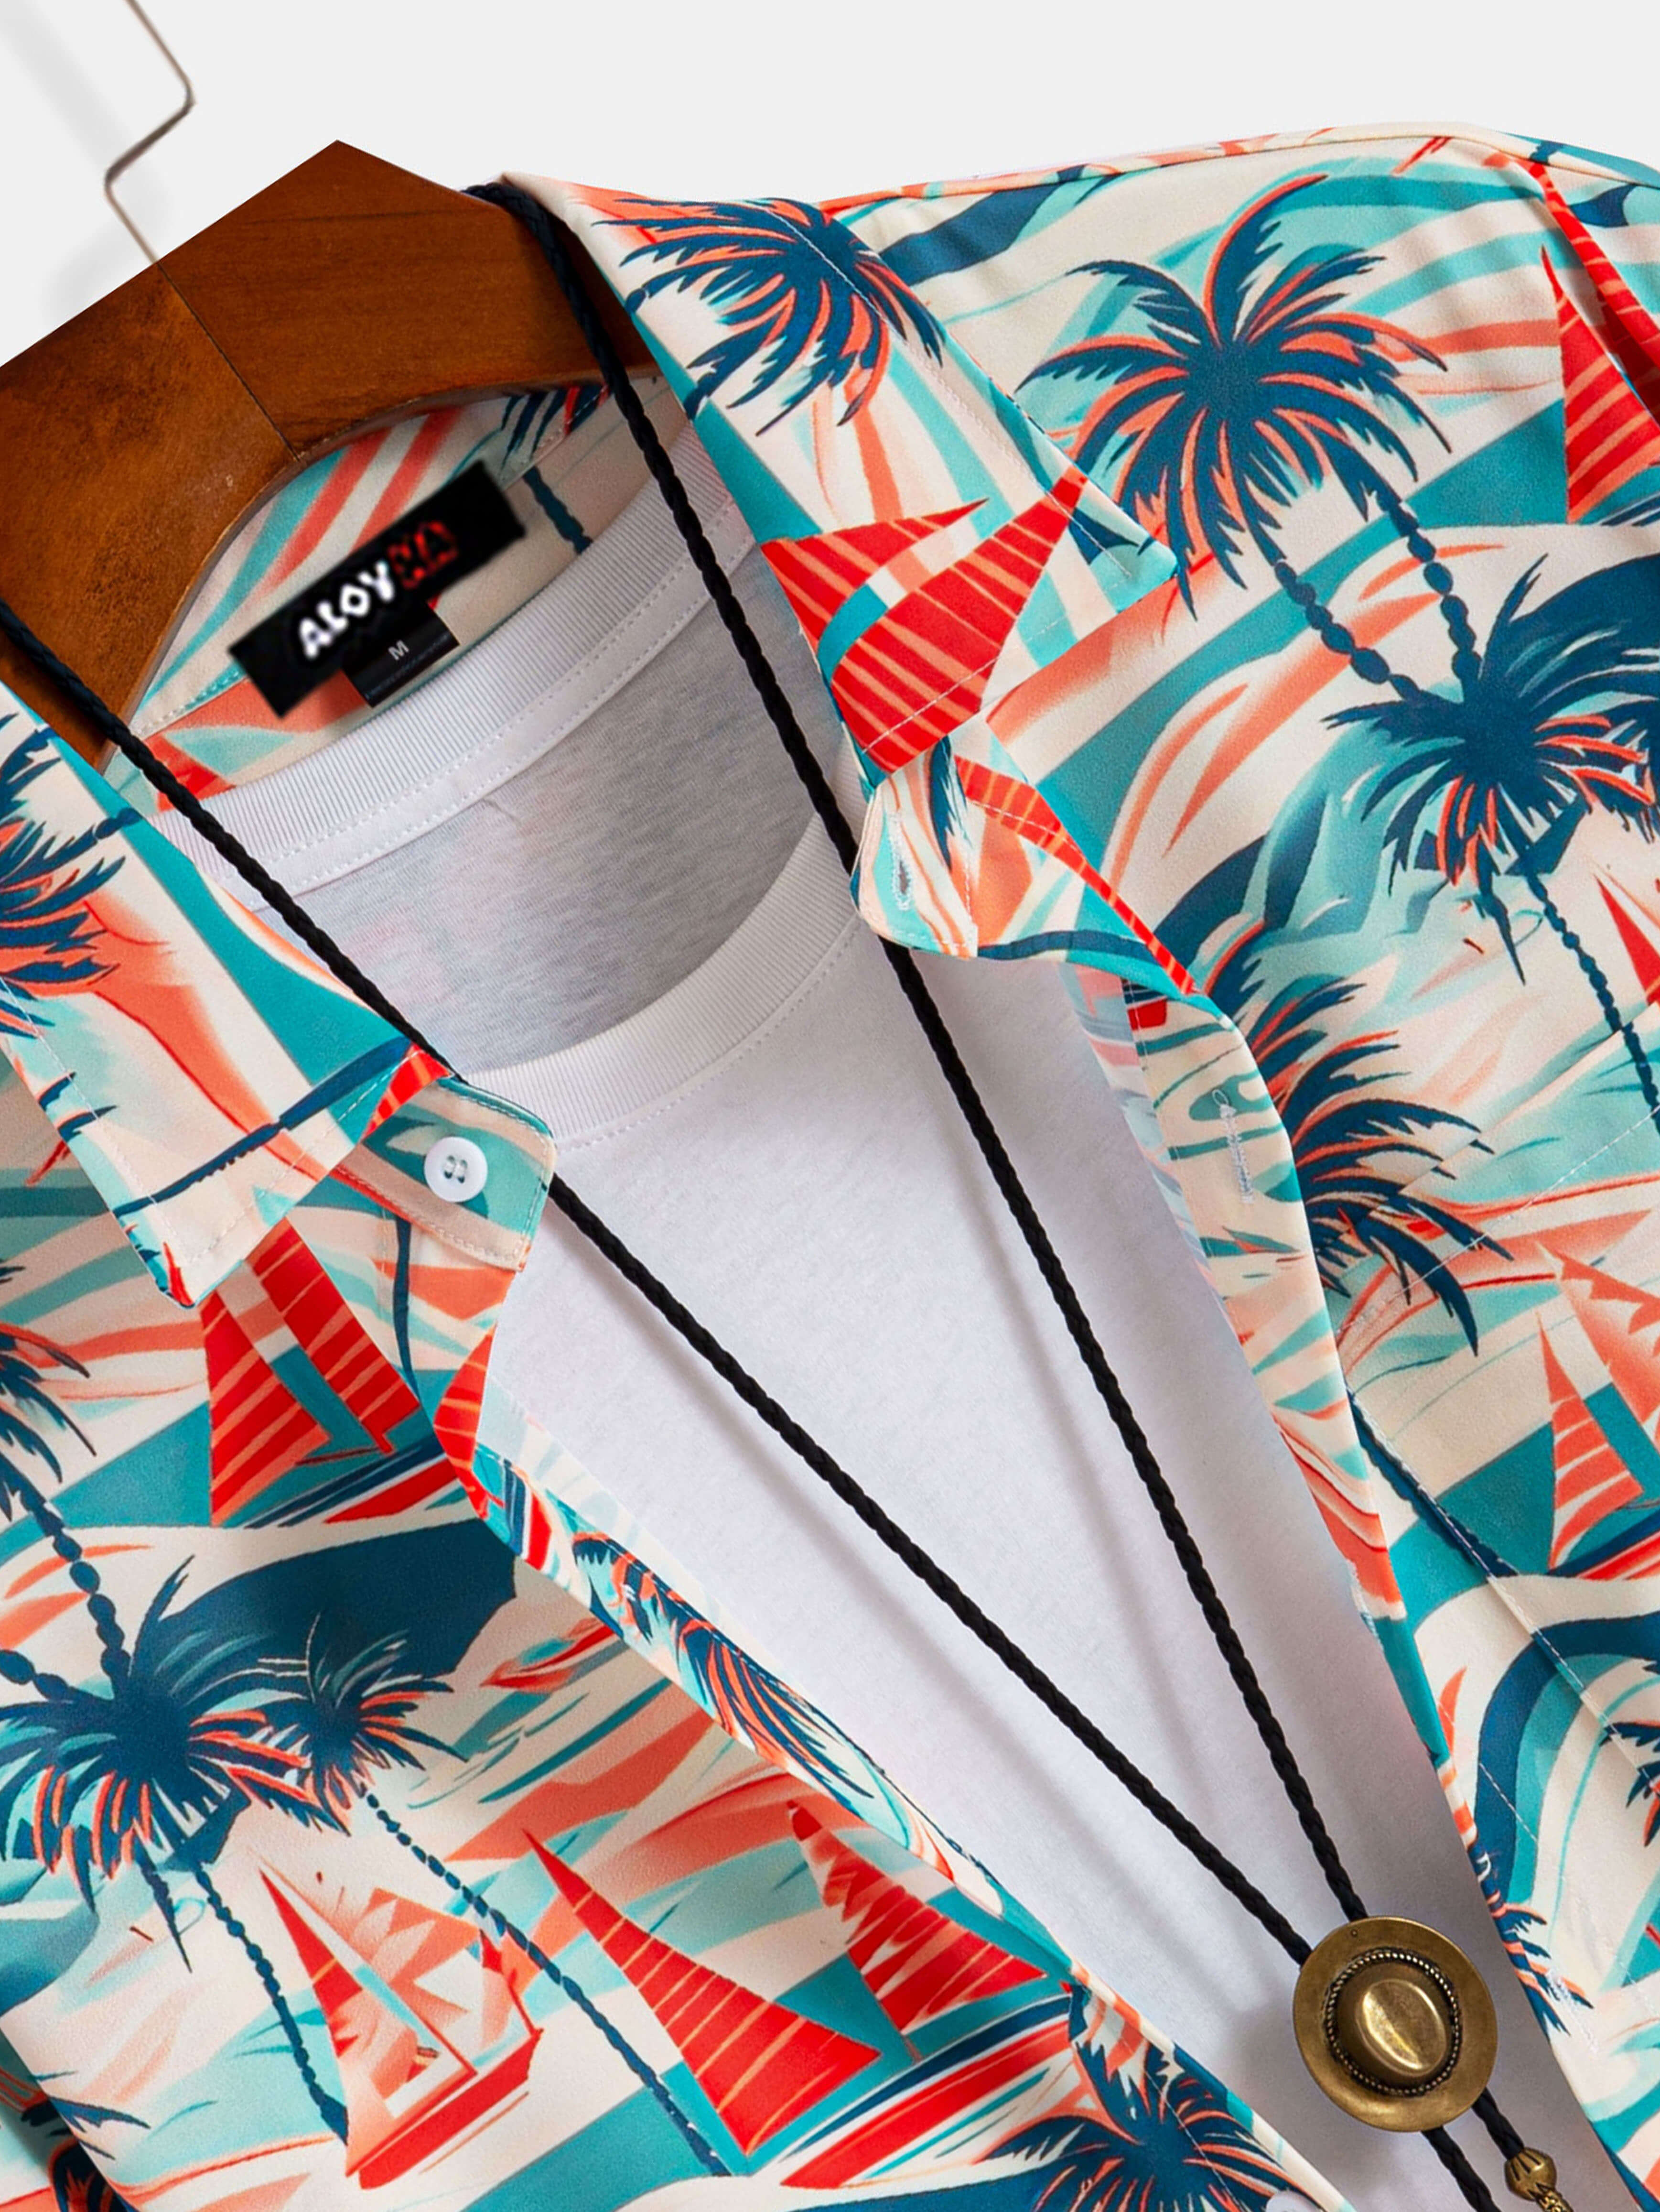 Vintage Hawaiian Shirt Beach Sail Tree Print Button-Up Shirt